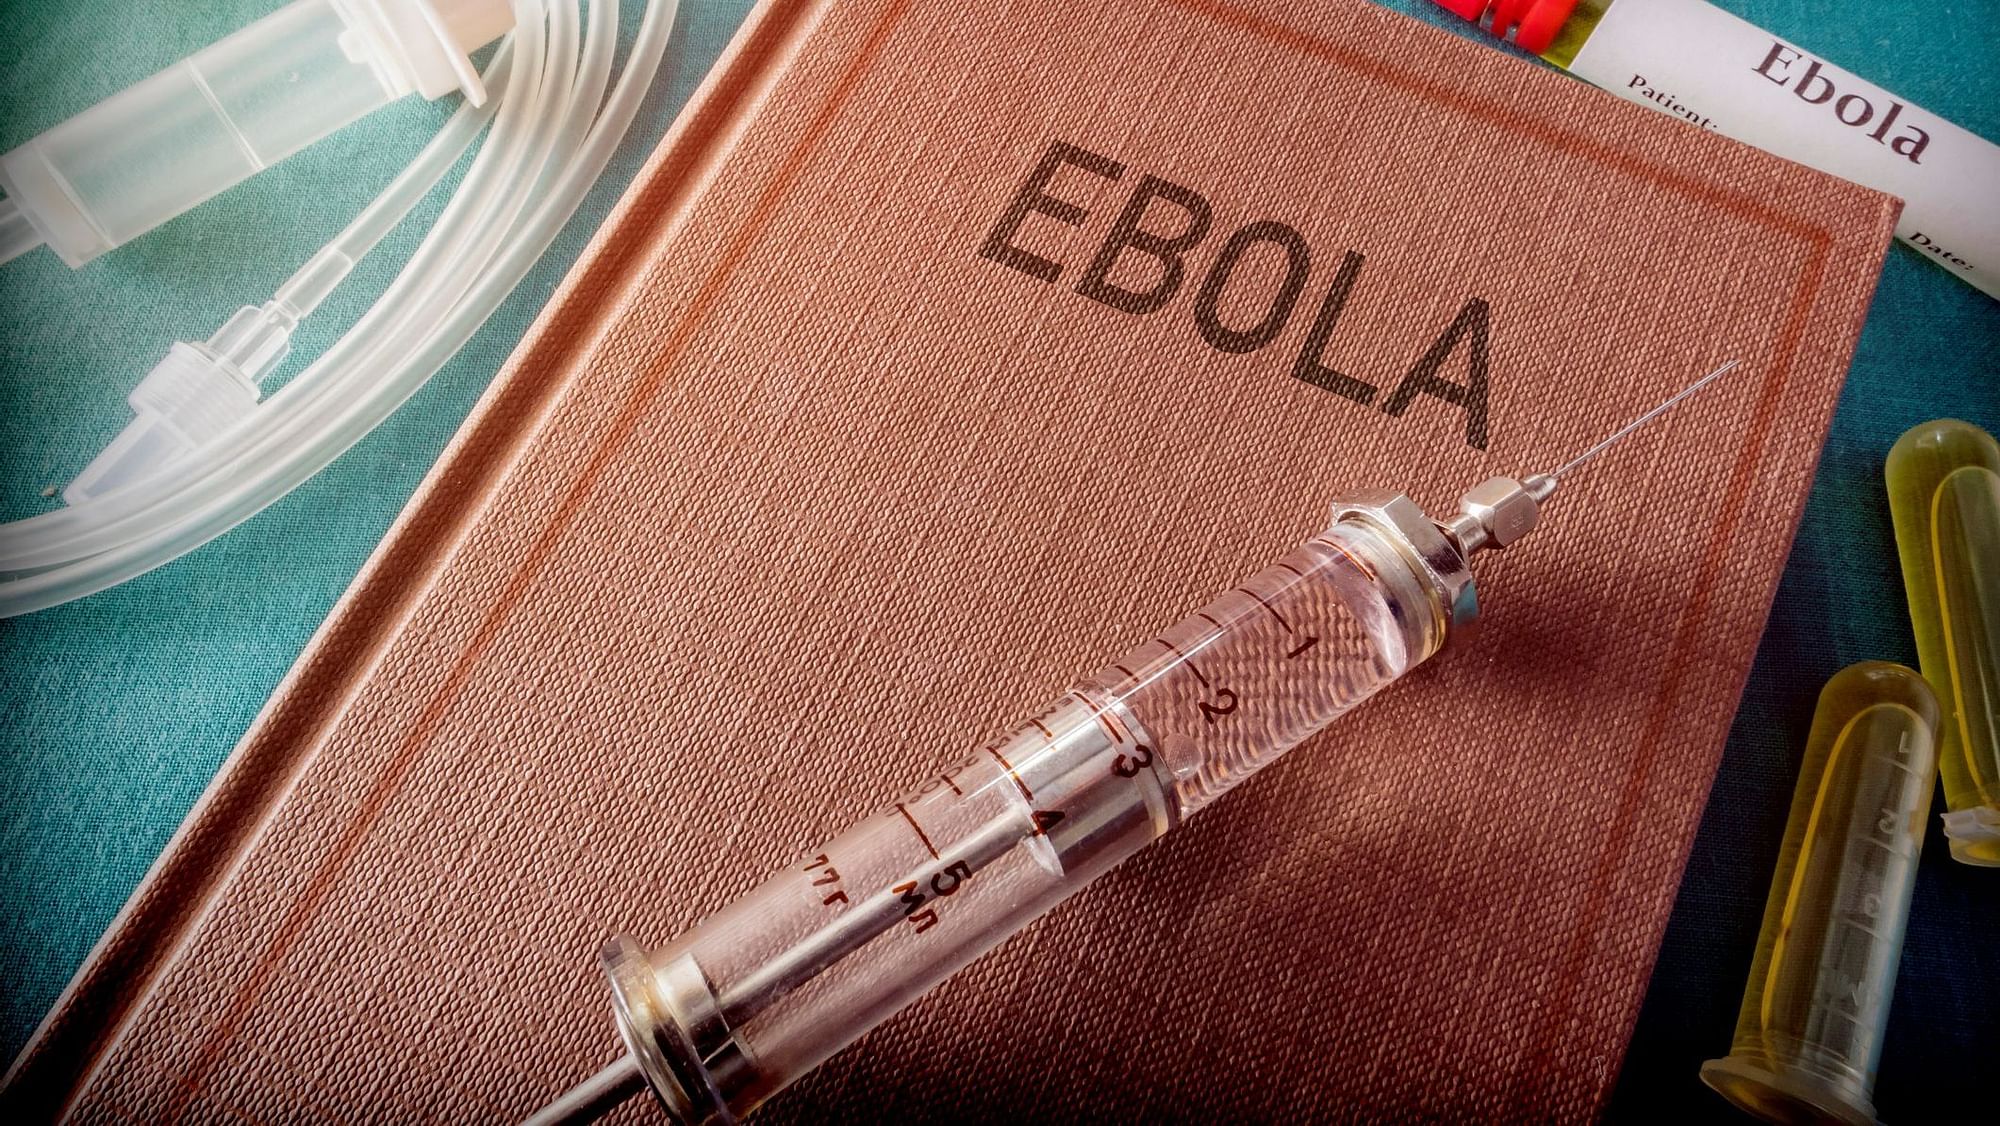 The World Health Organisation has declared Ebola a global health emergency.